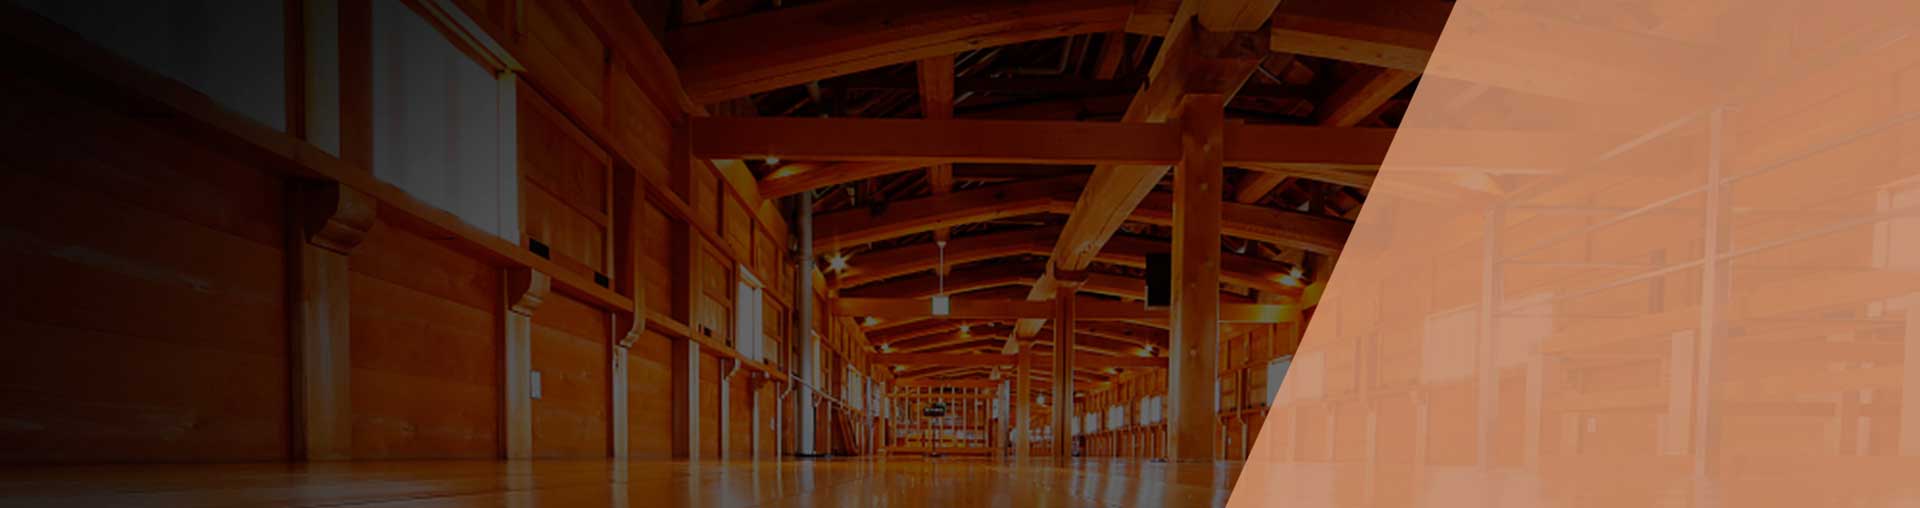 Environmental SPC
Flooring & SPC Flooring
Accessories